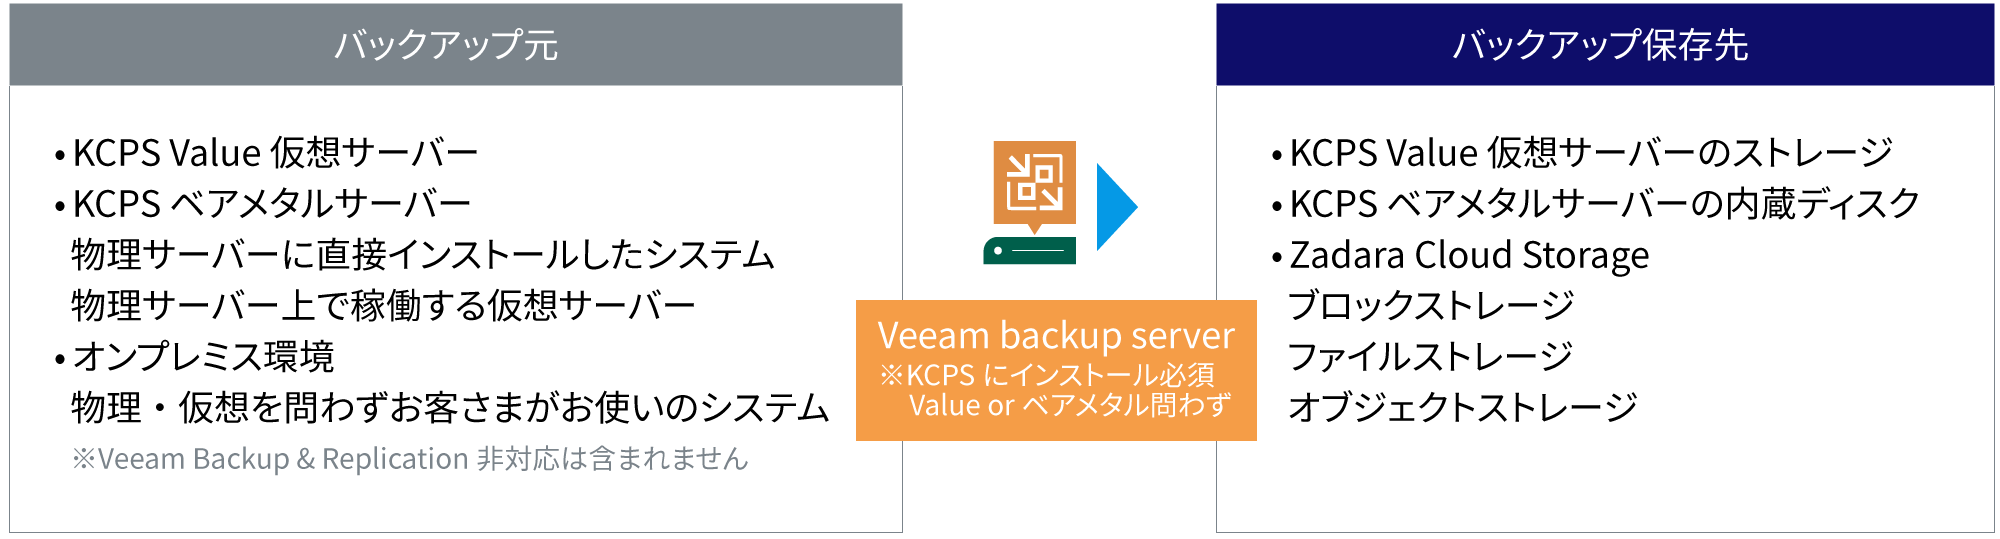 Veeam backup server (※KCPS にインストール必須、Value or ベアメタル問わず) を使用することでさまざまな環境でバックアップが可能に。バックアップ保存先はKCPS Value 仮想サーバーのストレージ、KCPS ベアメタルサーバーの内蔵ディスク、Zadara Cloud Storageなどがあります。